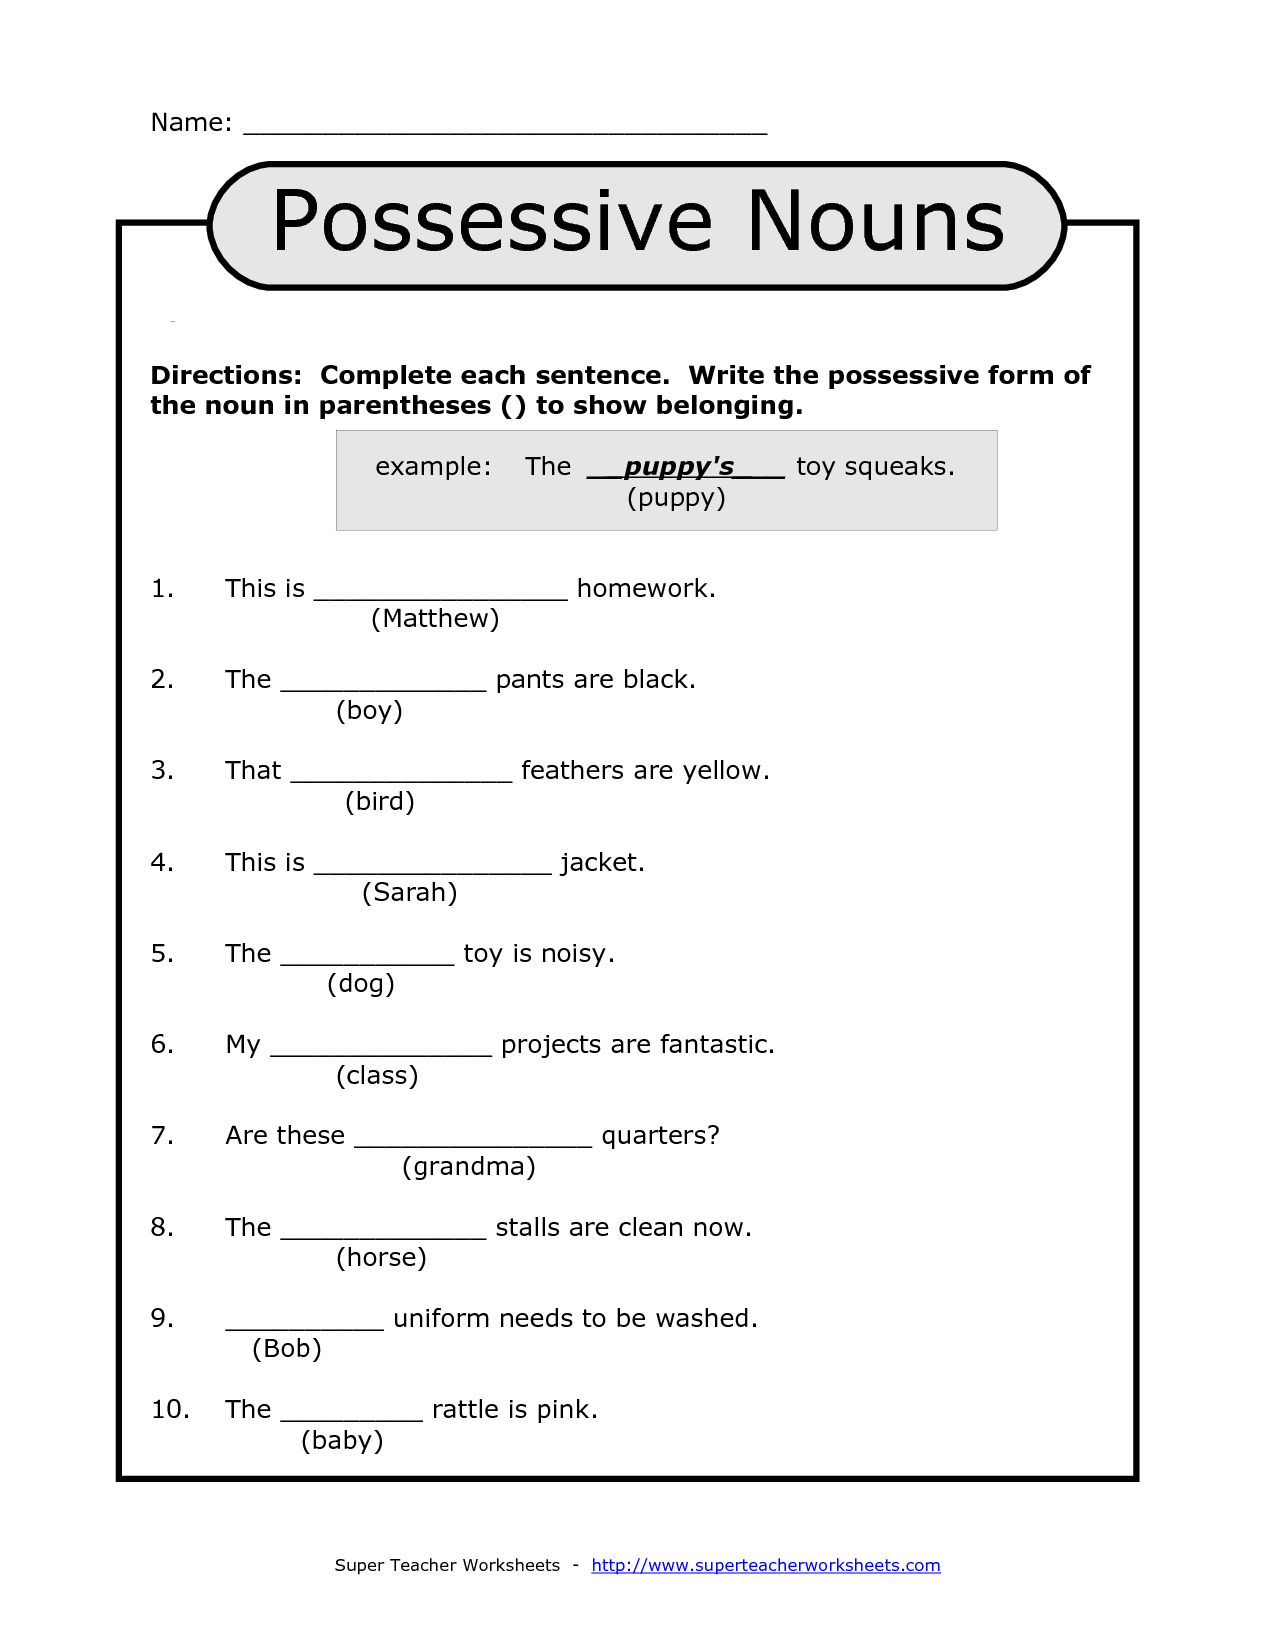 17 Free Possessive Nouns Printable Worksheets Worksheeto